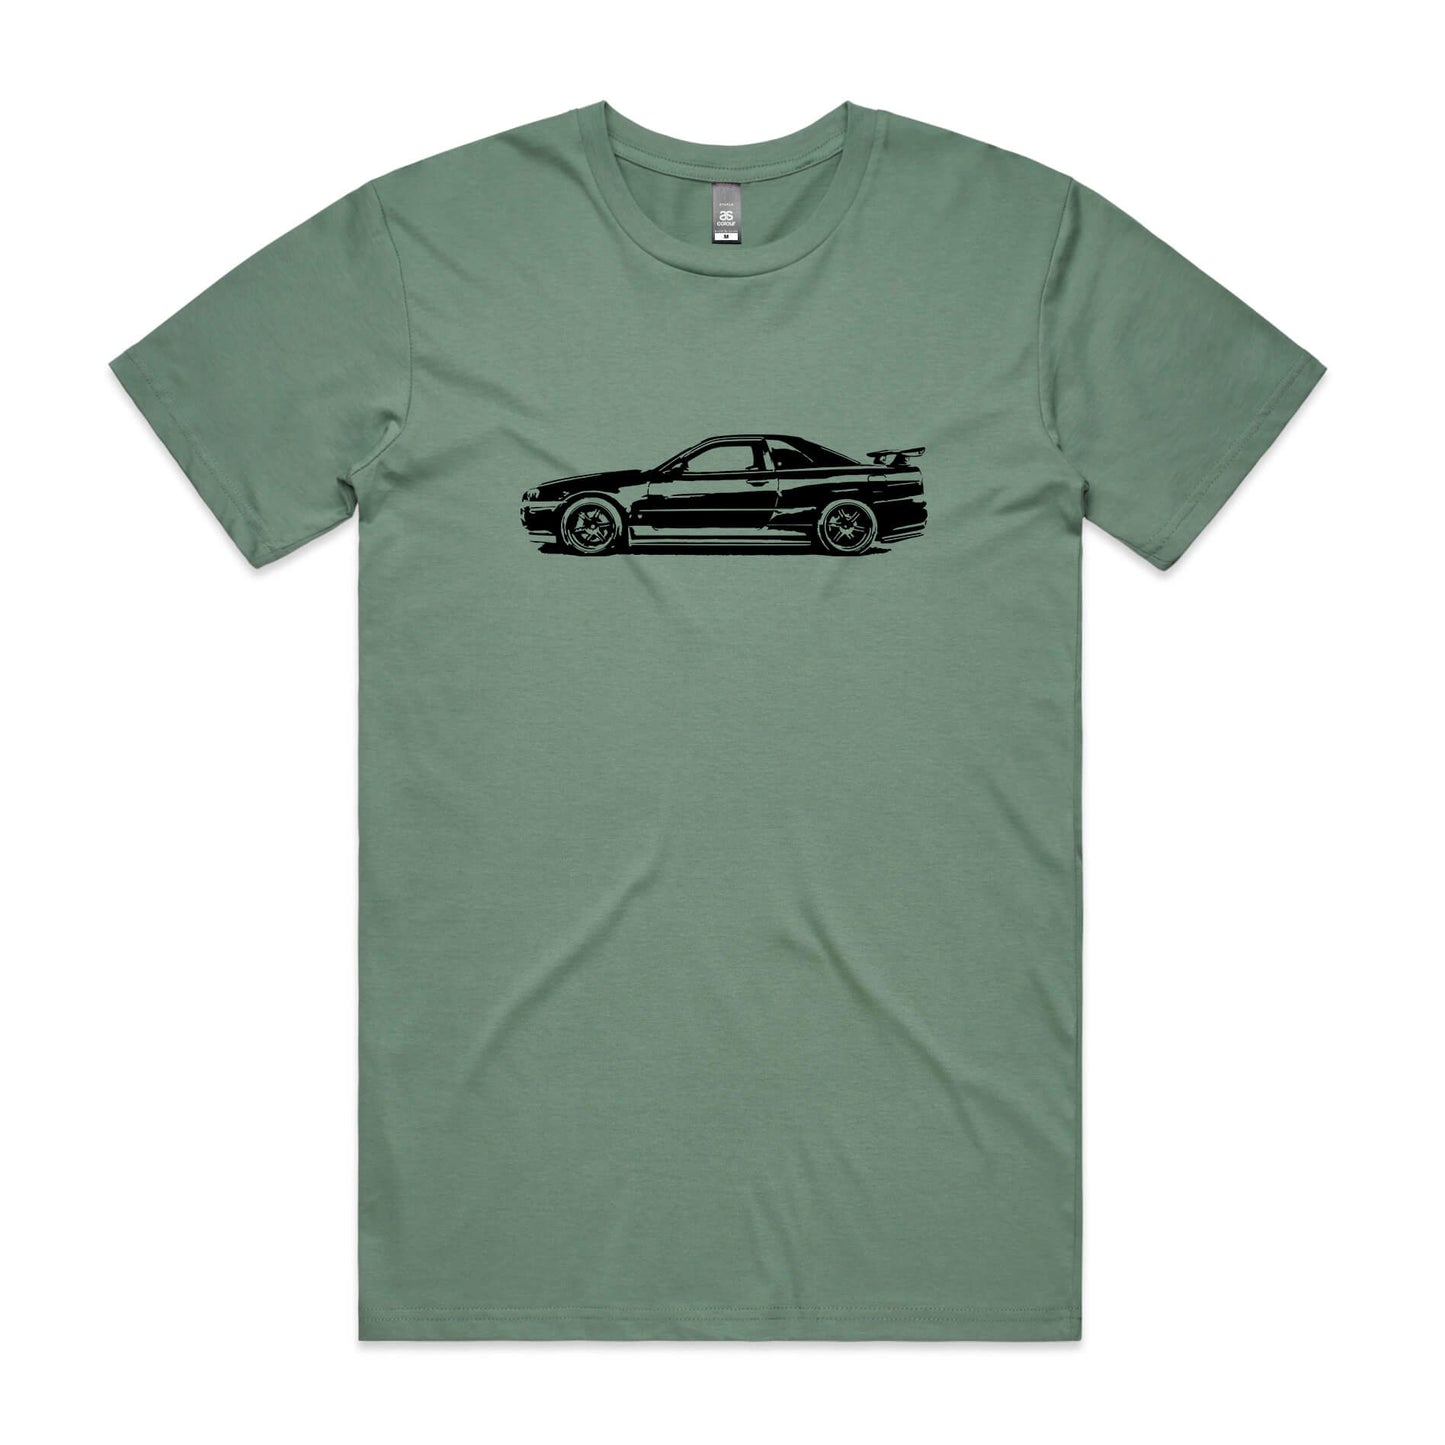 Nissan R34 GT-R Skyline T-Shirt